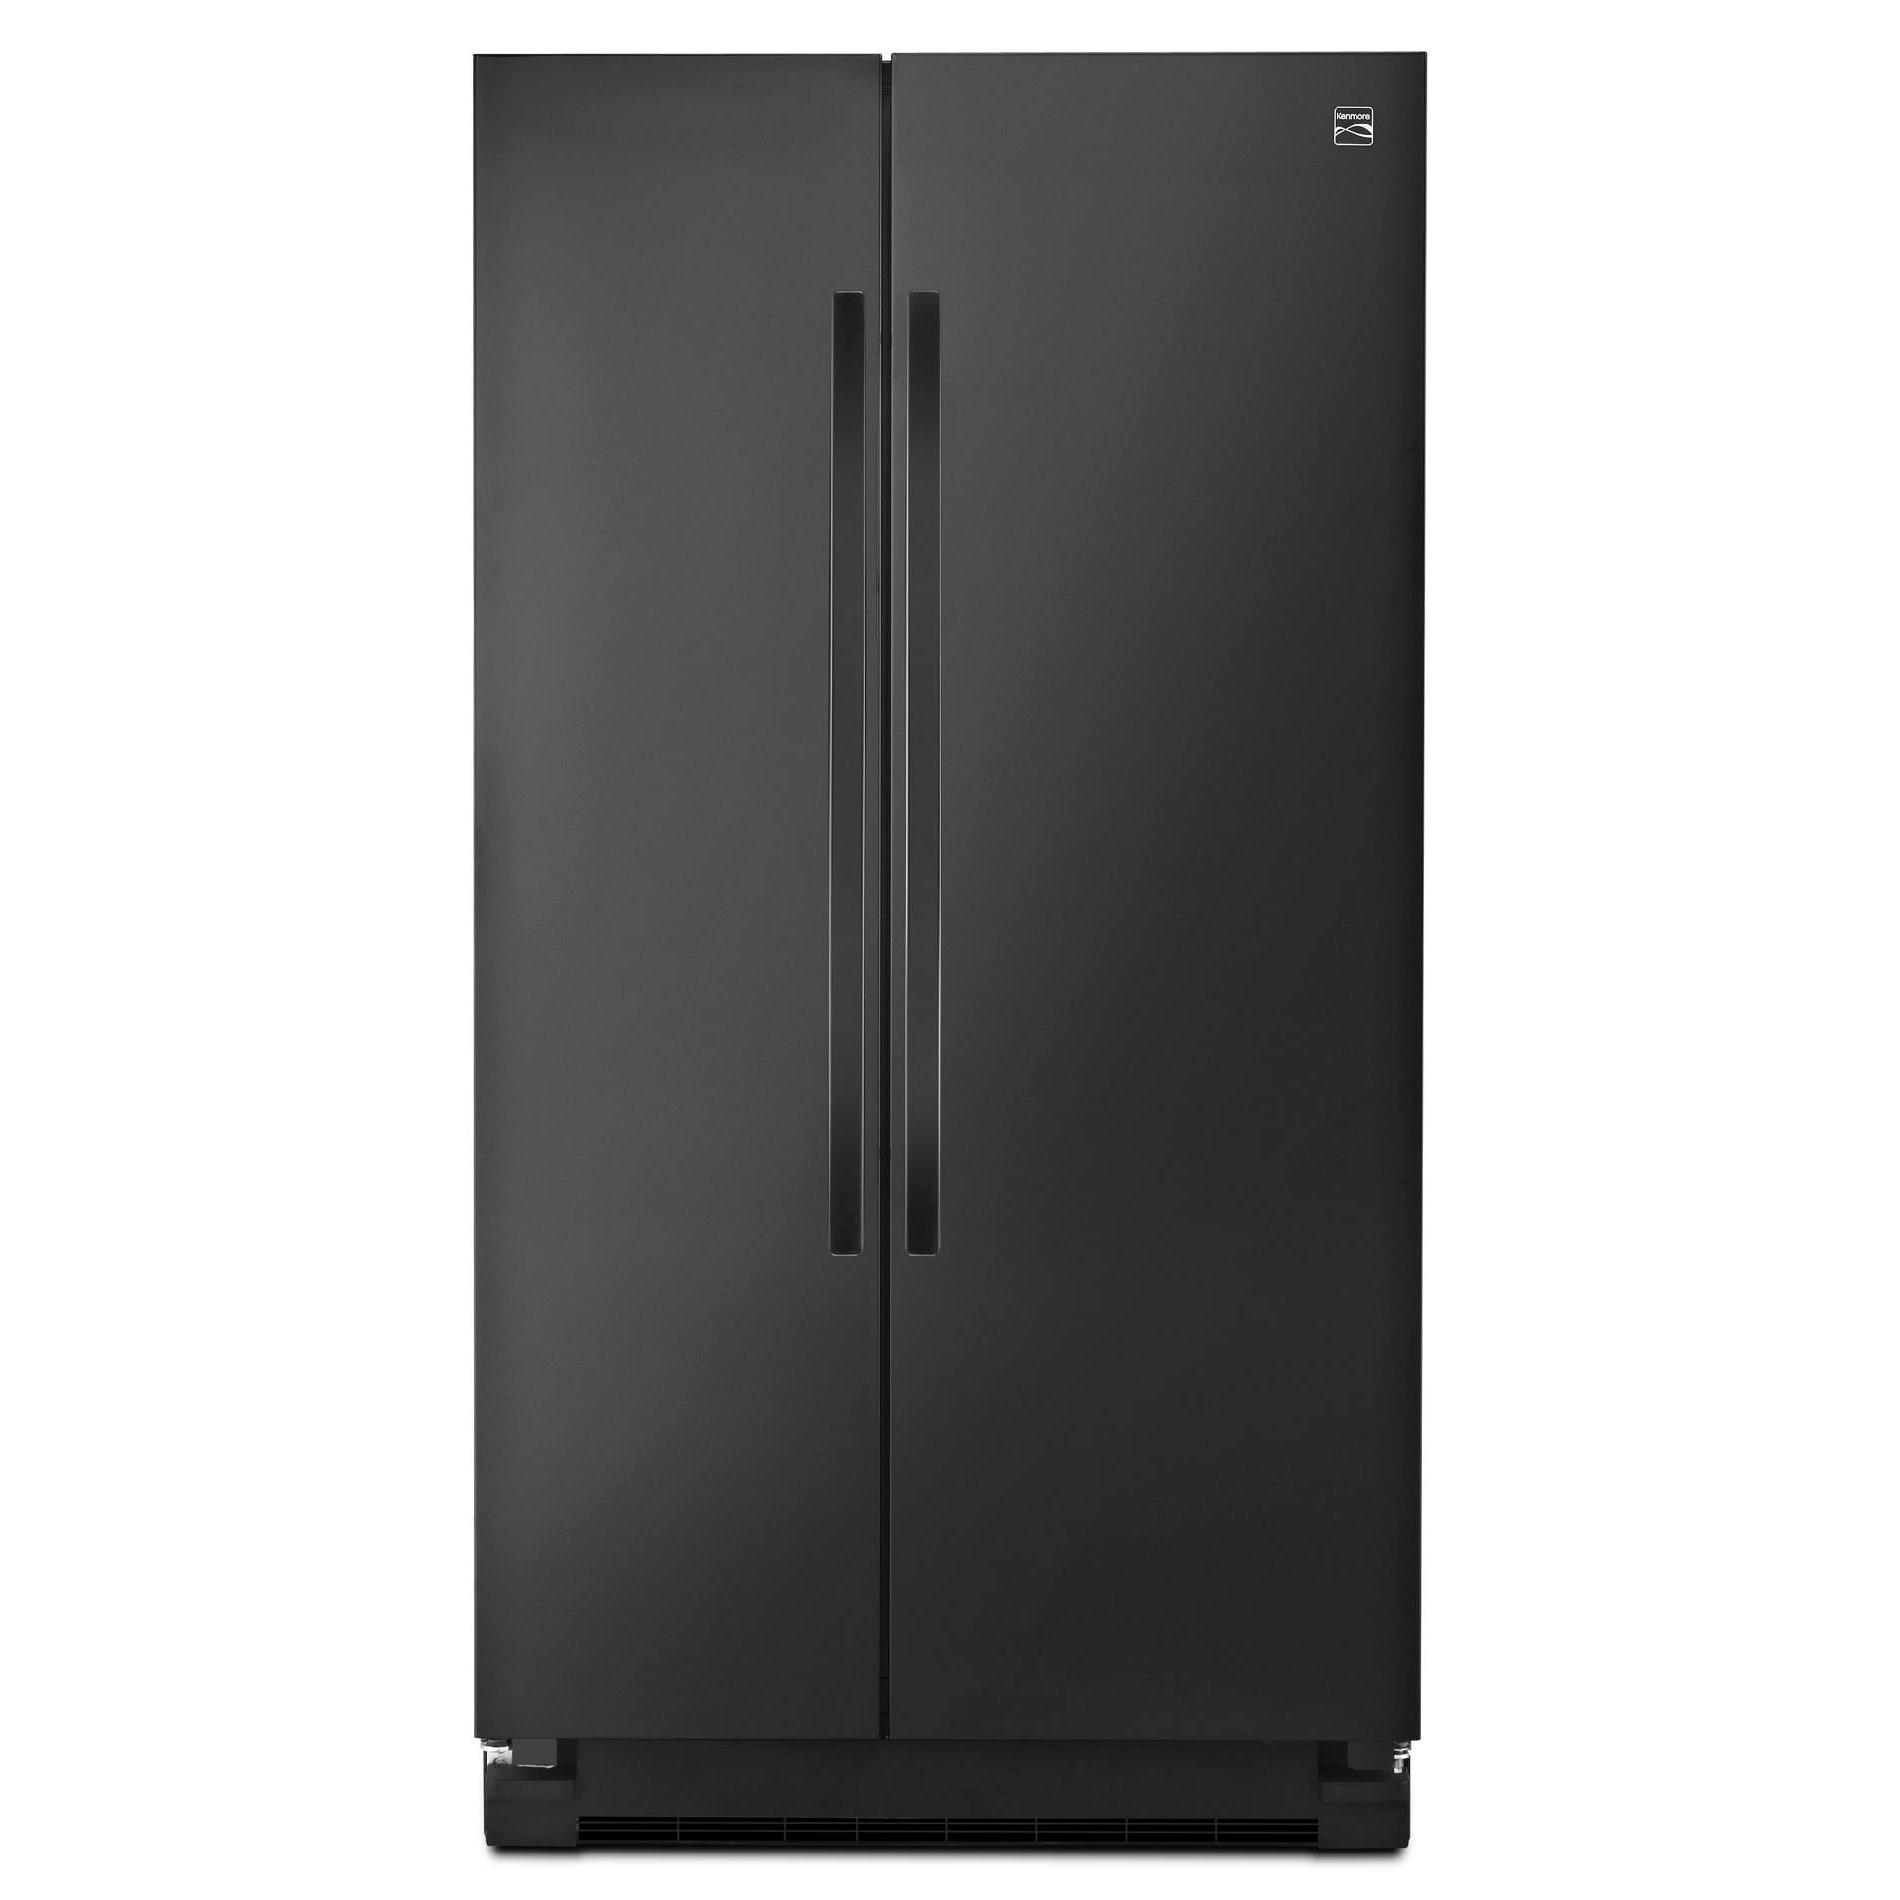 UPC 883049265711 product image for 25 cu. ft. Side-by-Side Refrigerator - Black | upcitemdb.com